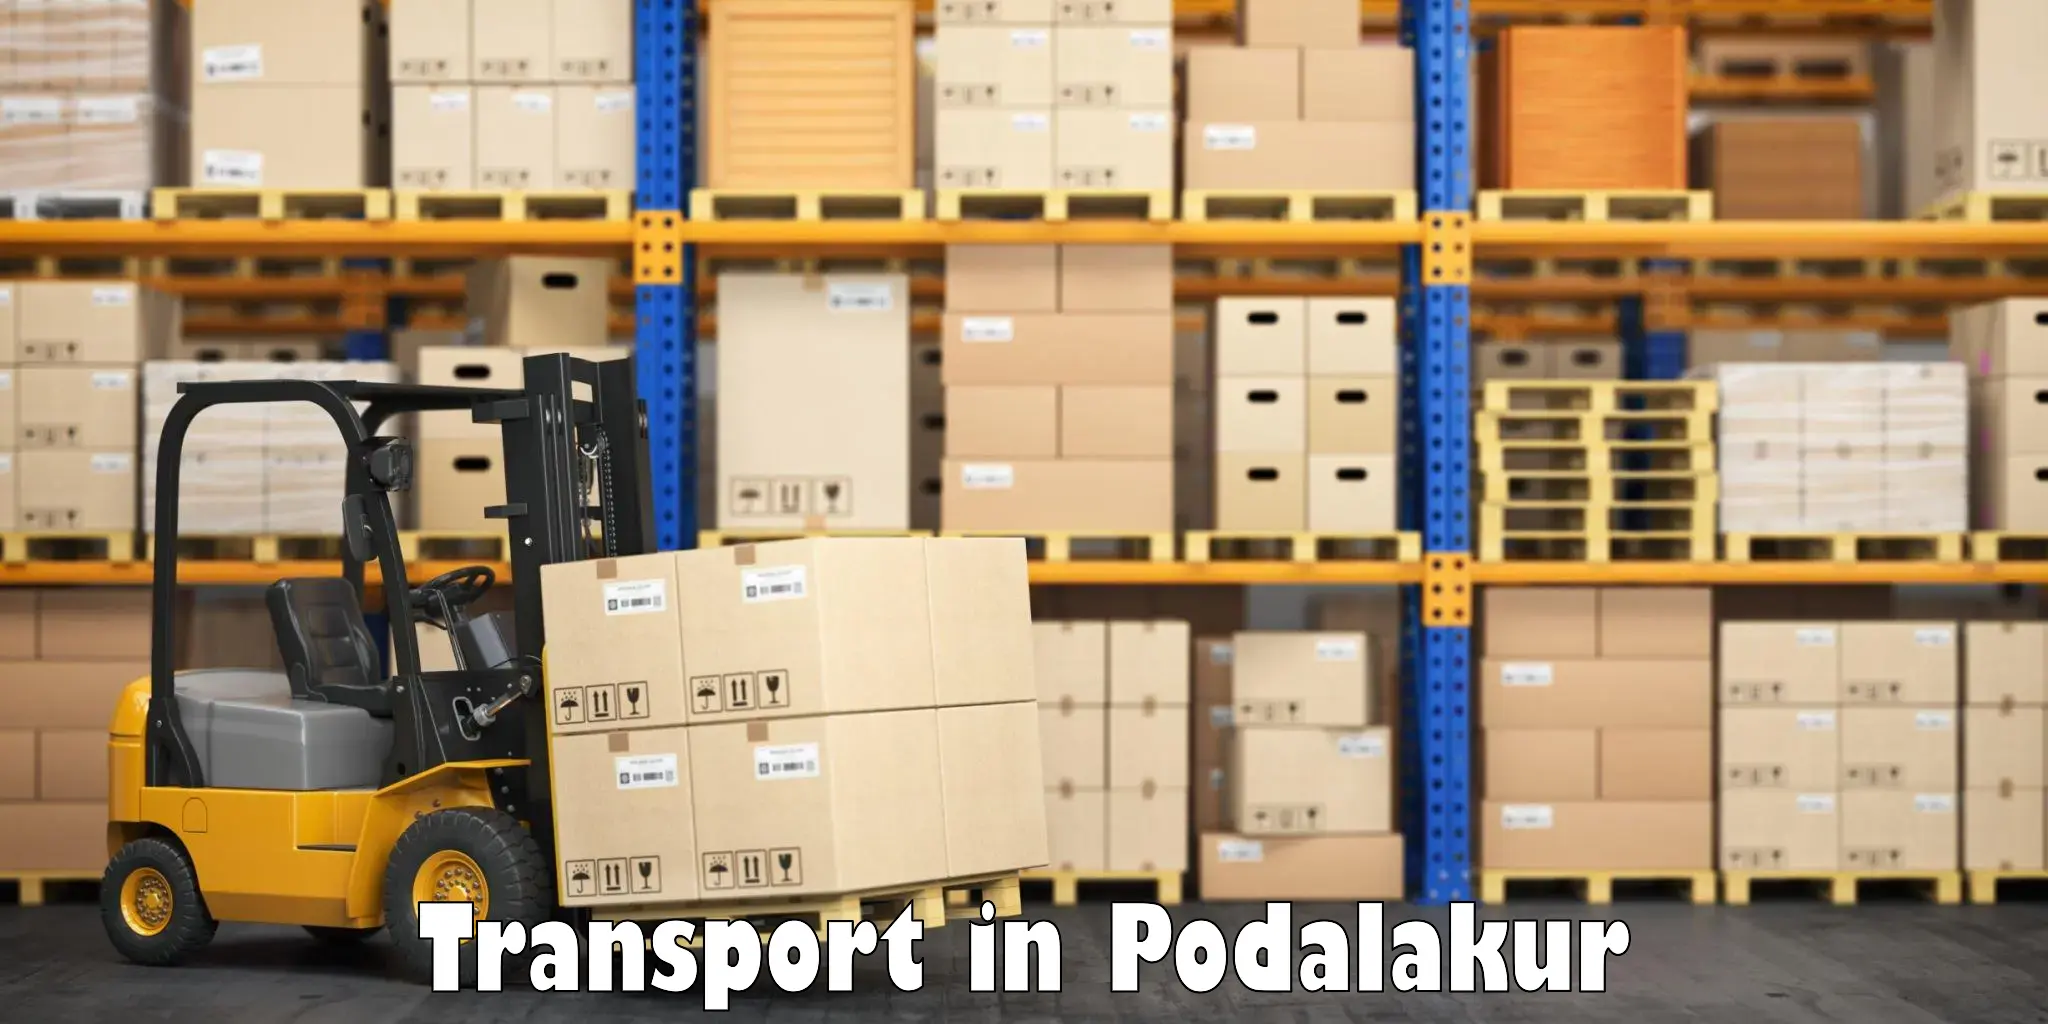 Interstate goods transport in Podalakur